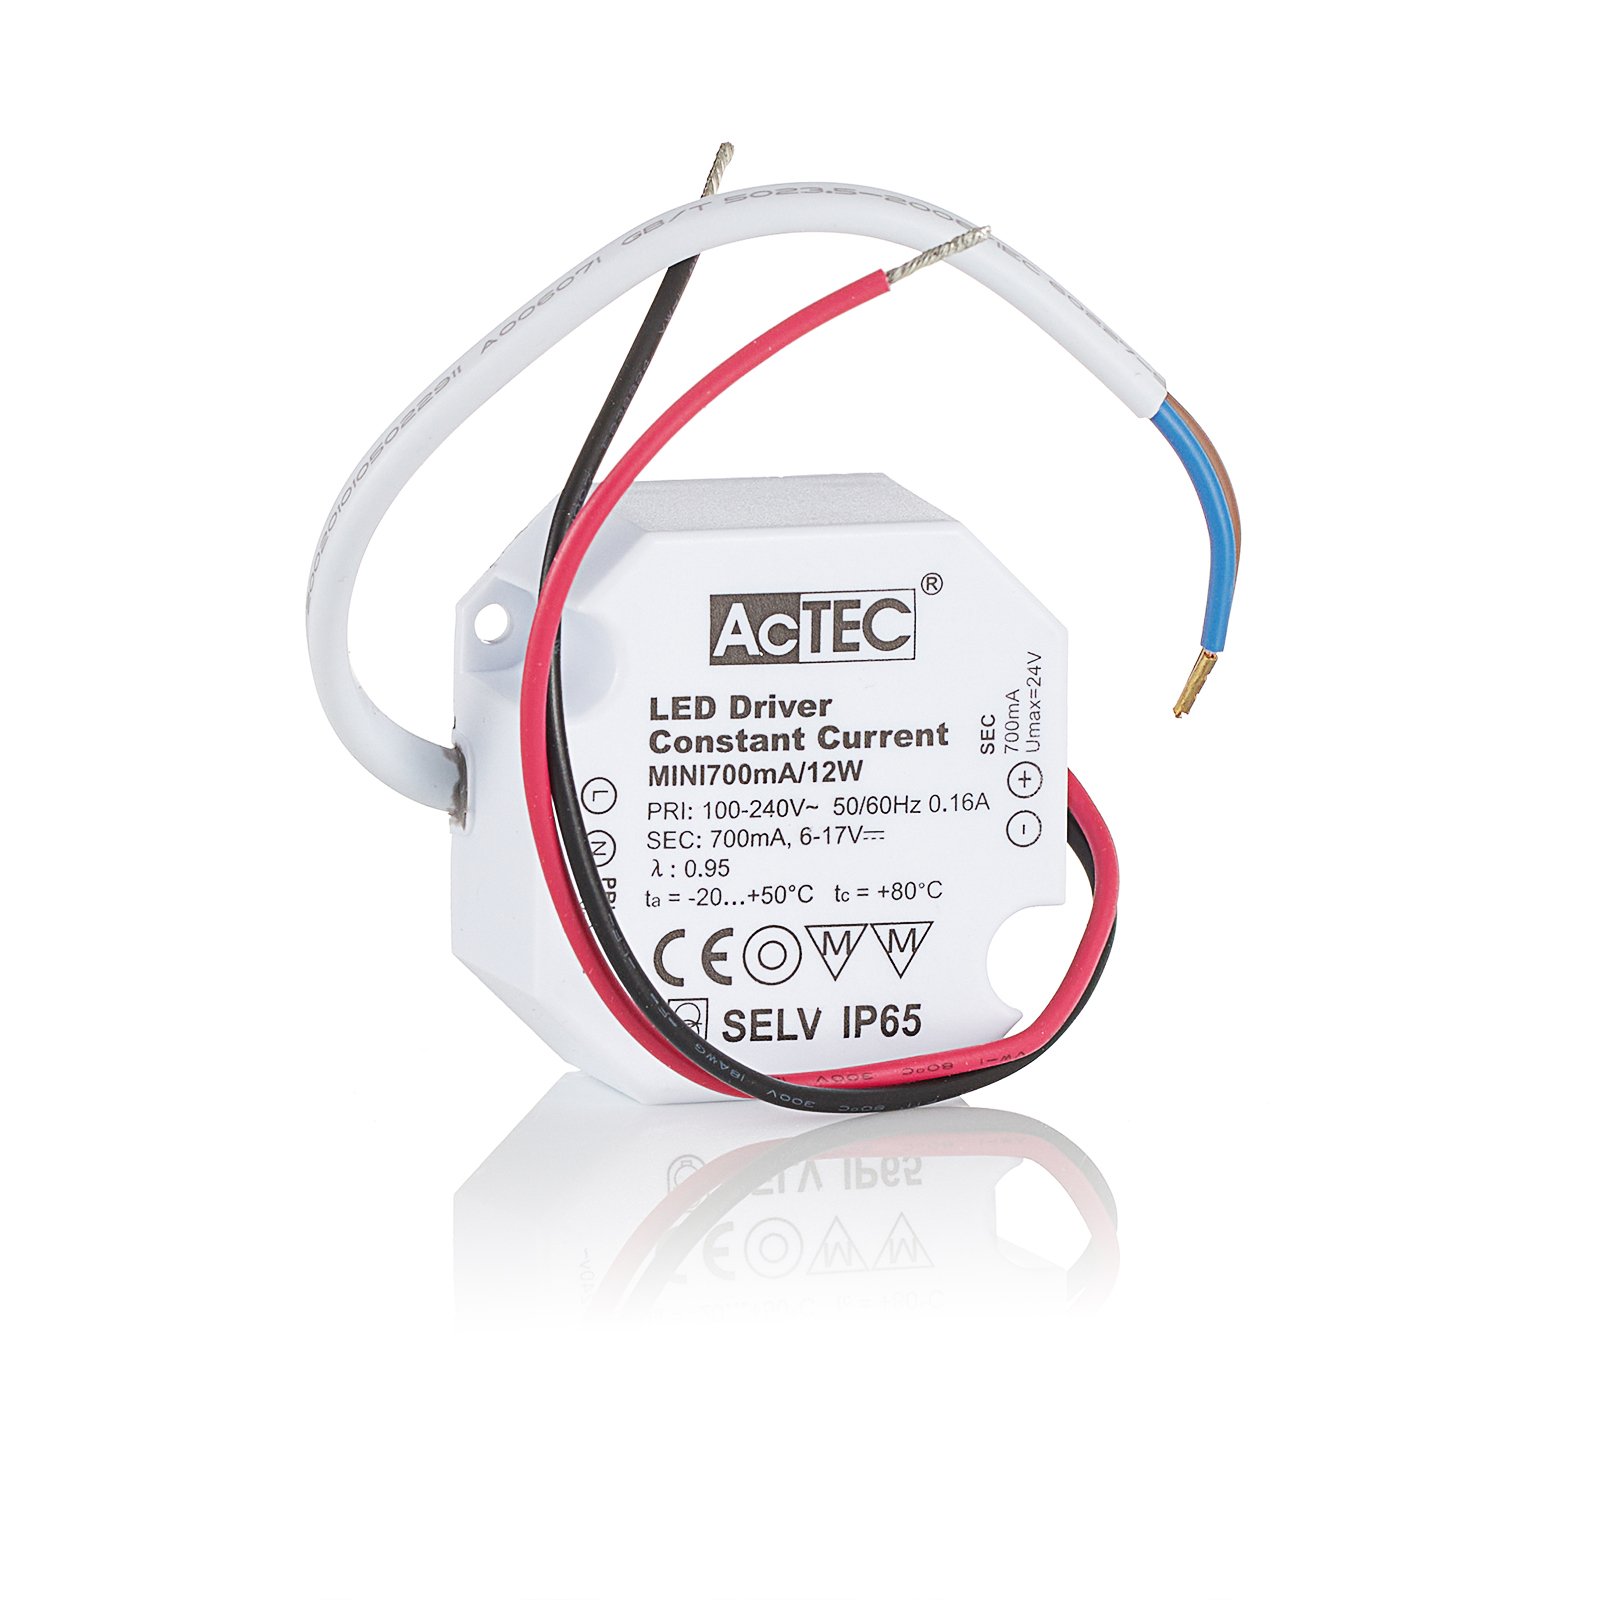 AcTEC Mini LED-Treiber CC 700mA, 12W, IP65